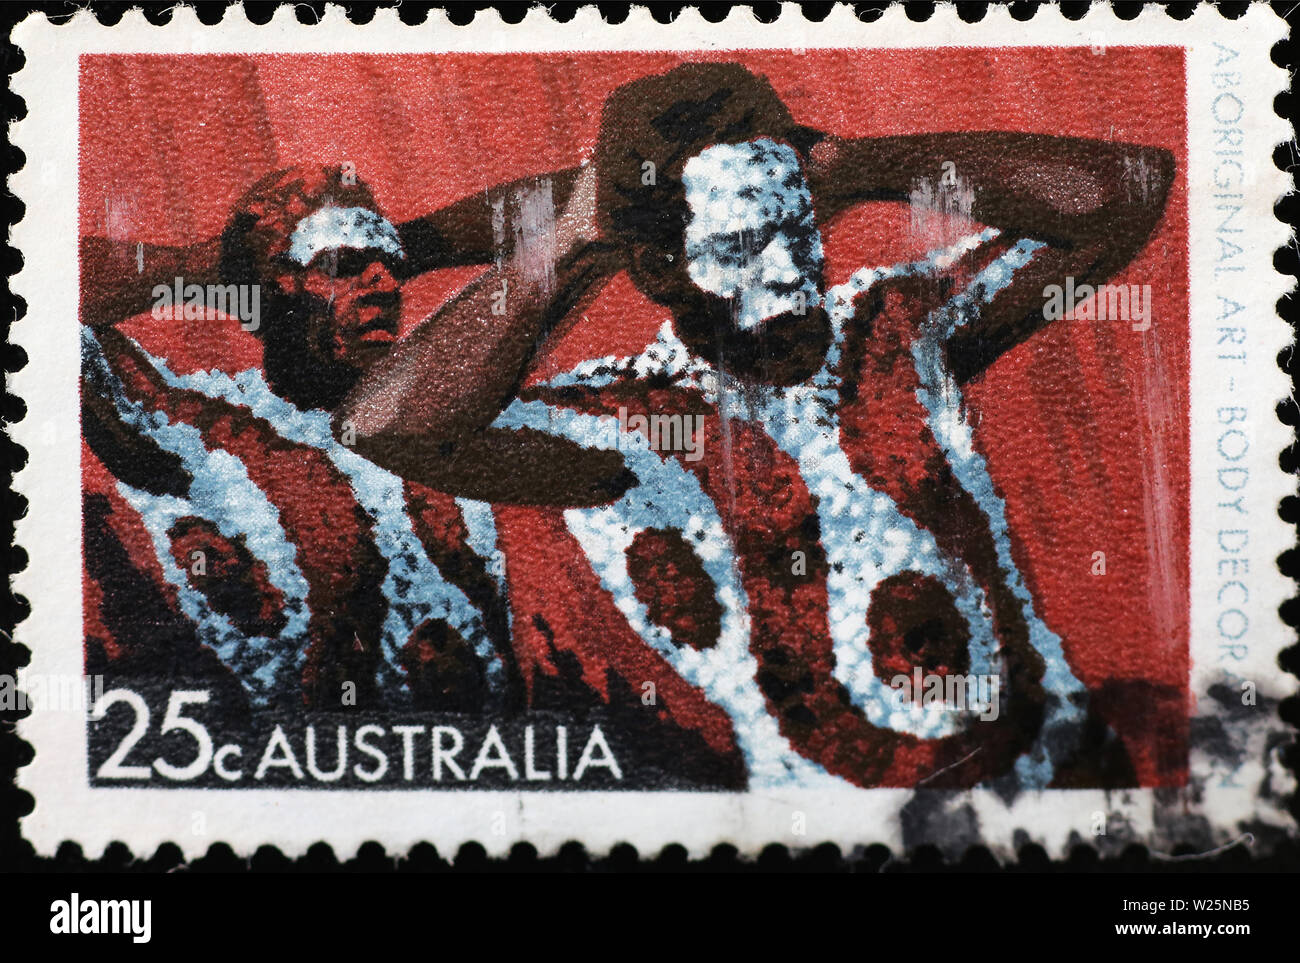 Two native australians on postage stamp Stock Photo